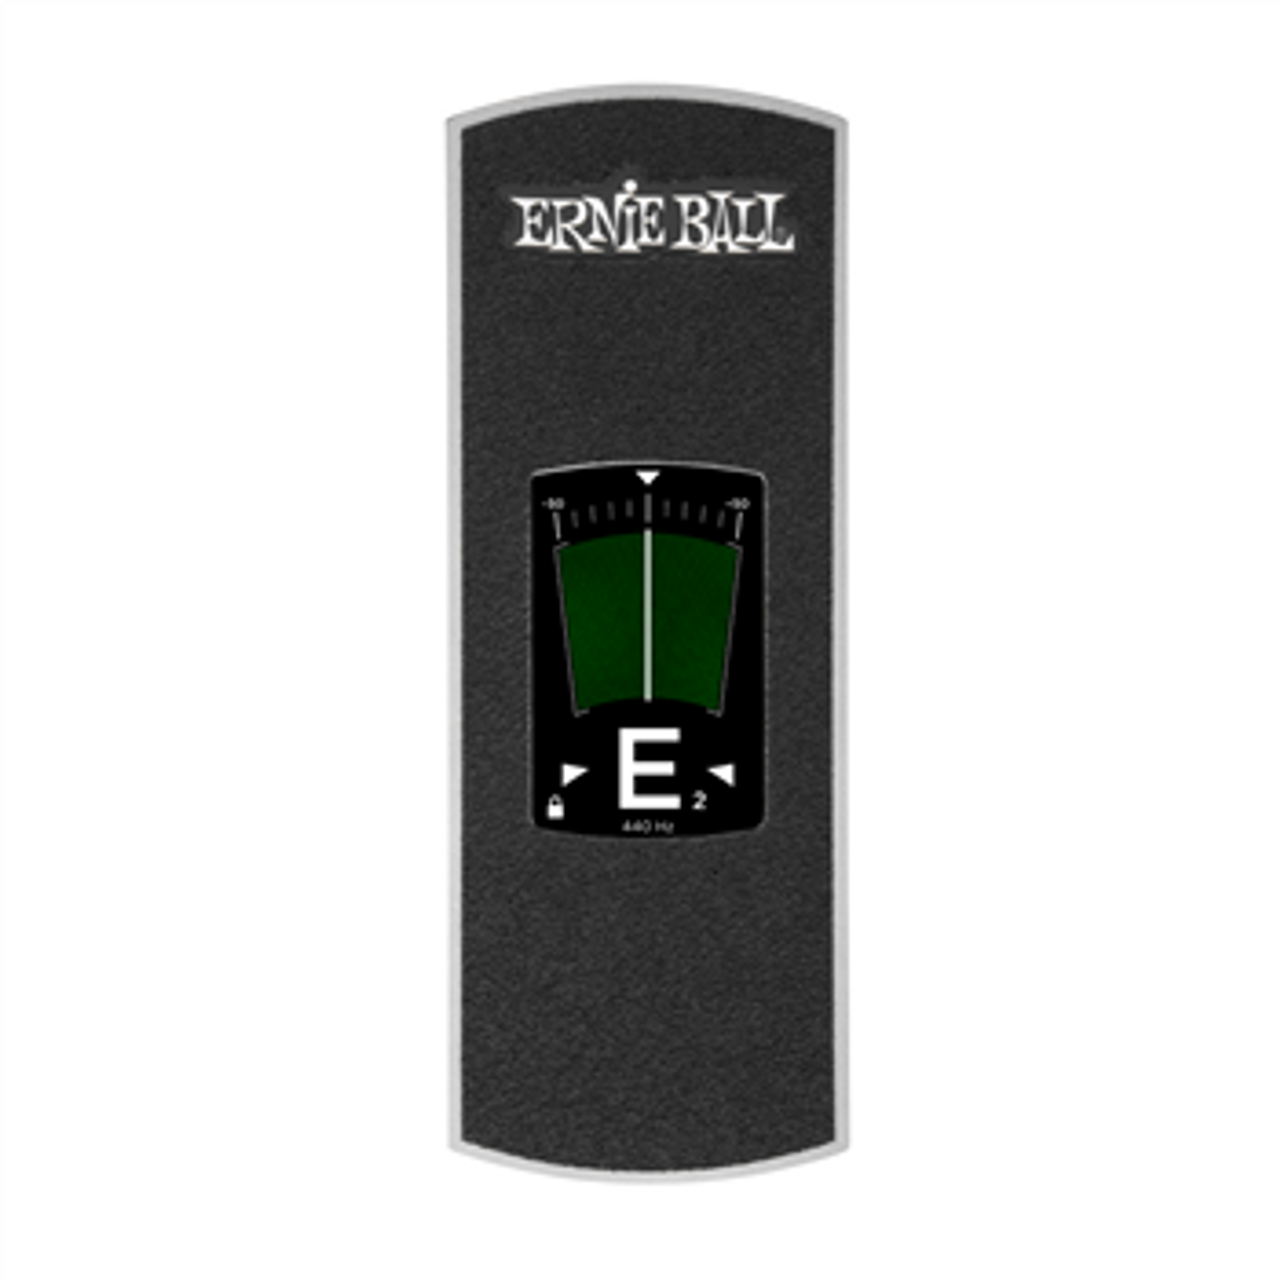 Ernie Ball PO6201 VPJR Tuner Pedal in Silver